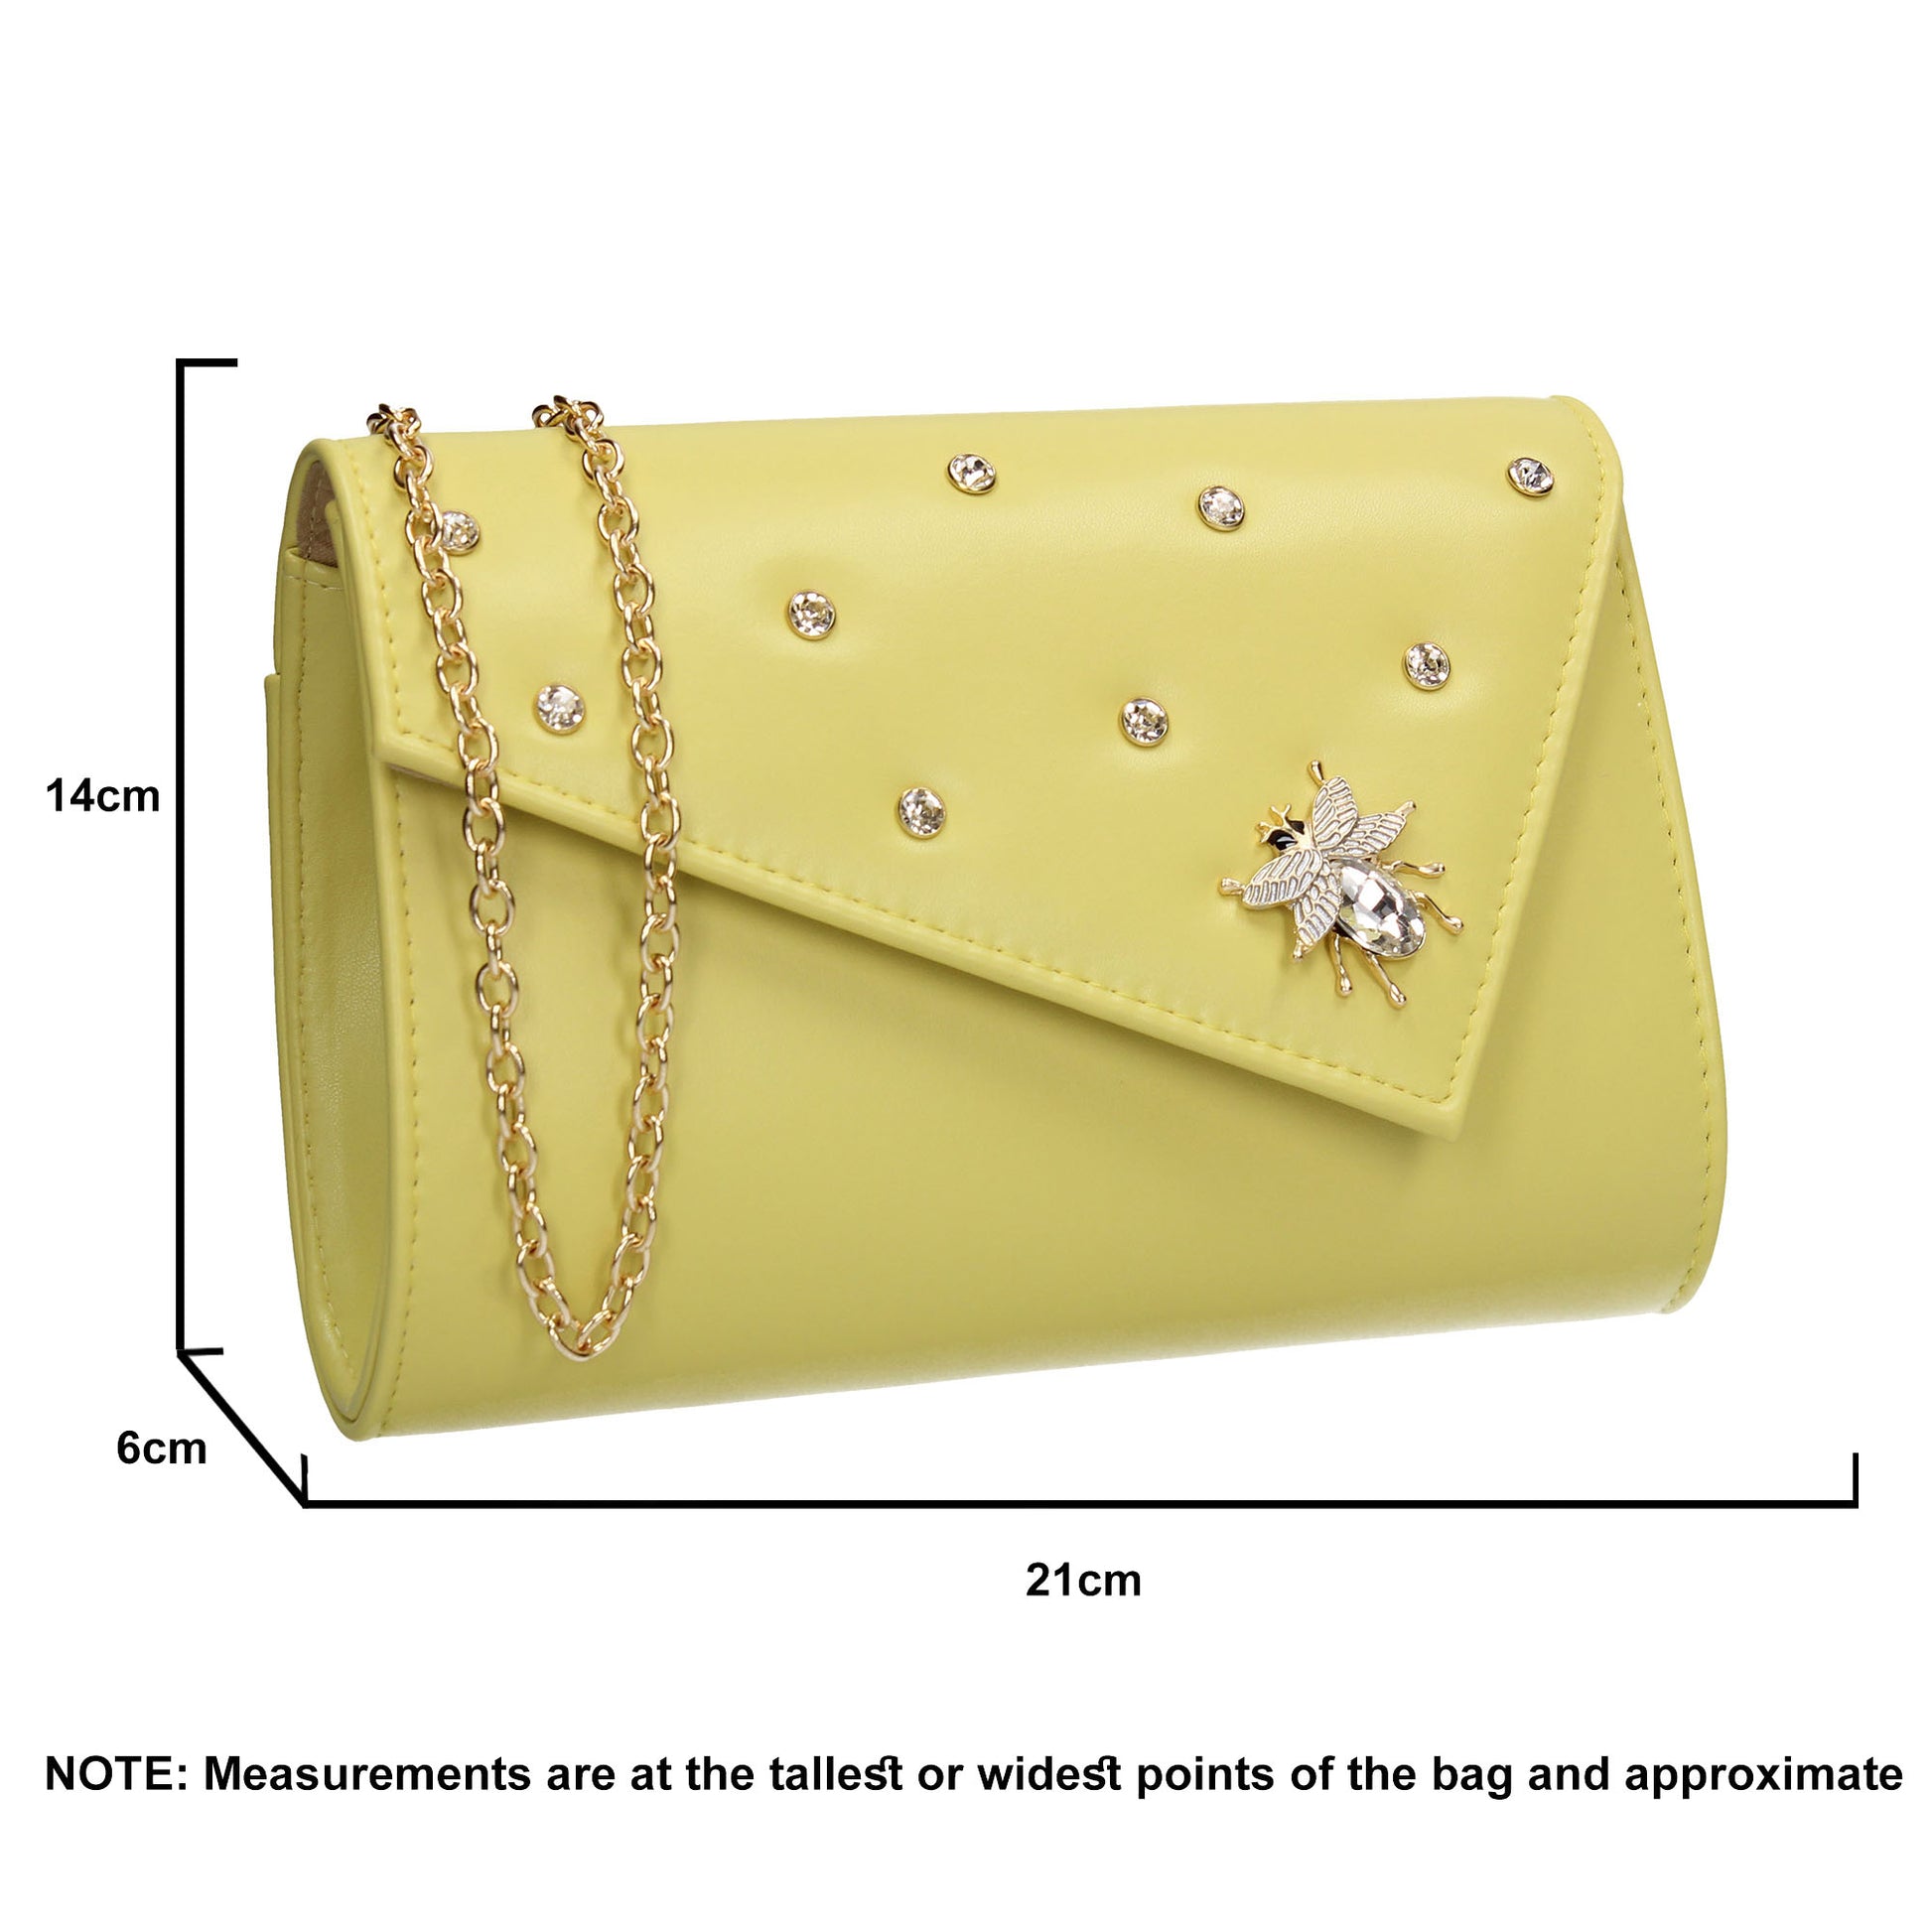 SWANKYSWANS Nylah Clutch Bag Yellow Cute Cheap Clutch Bag For Weddings School and Work